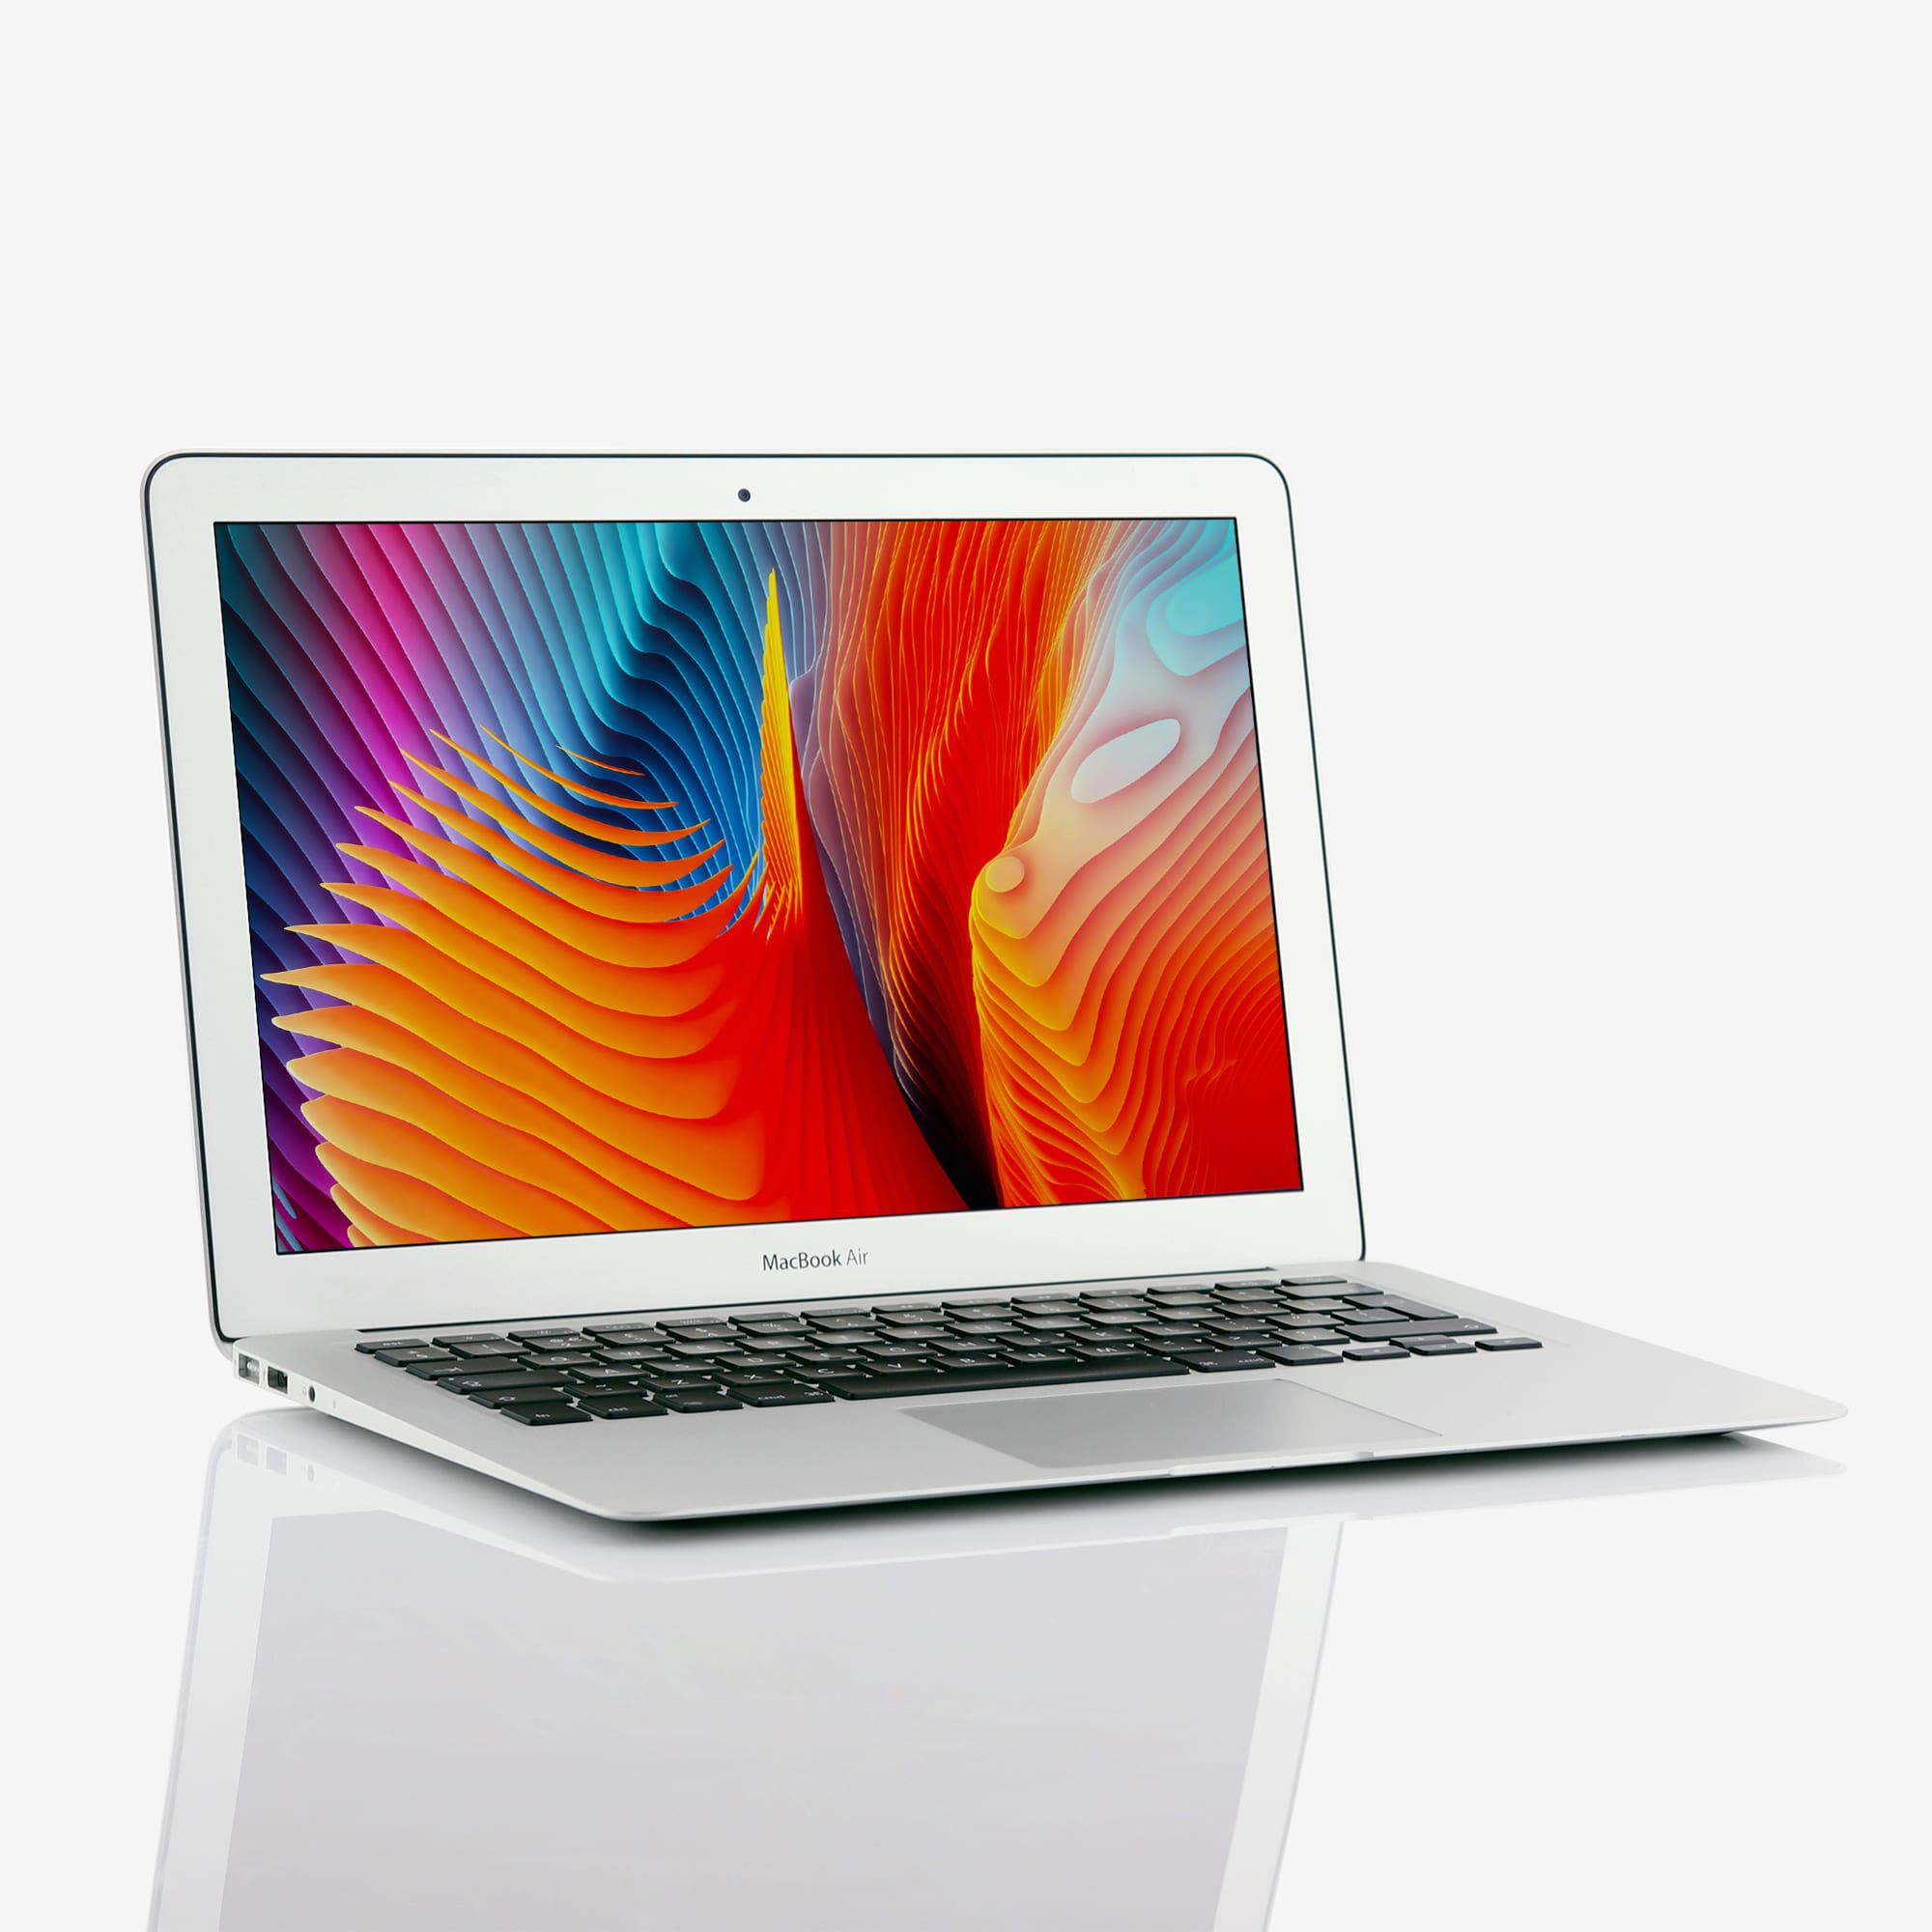 1 x Apple MacBook Air 13 Inch Intel Core i5 1.60 GHz (2015)